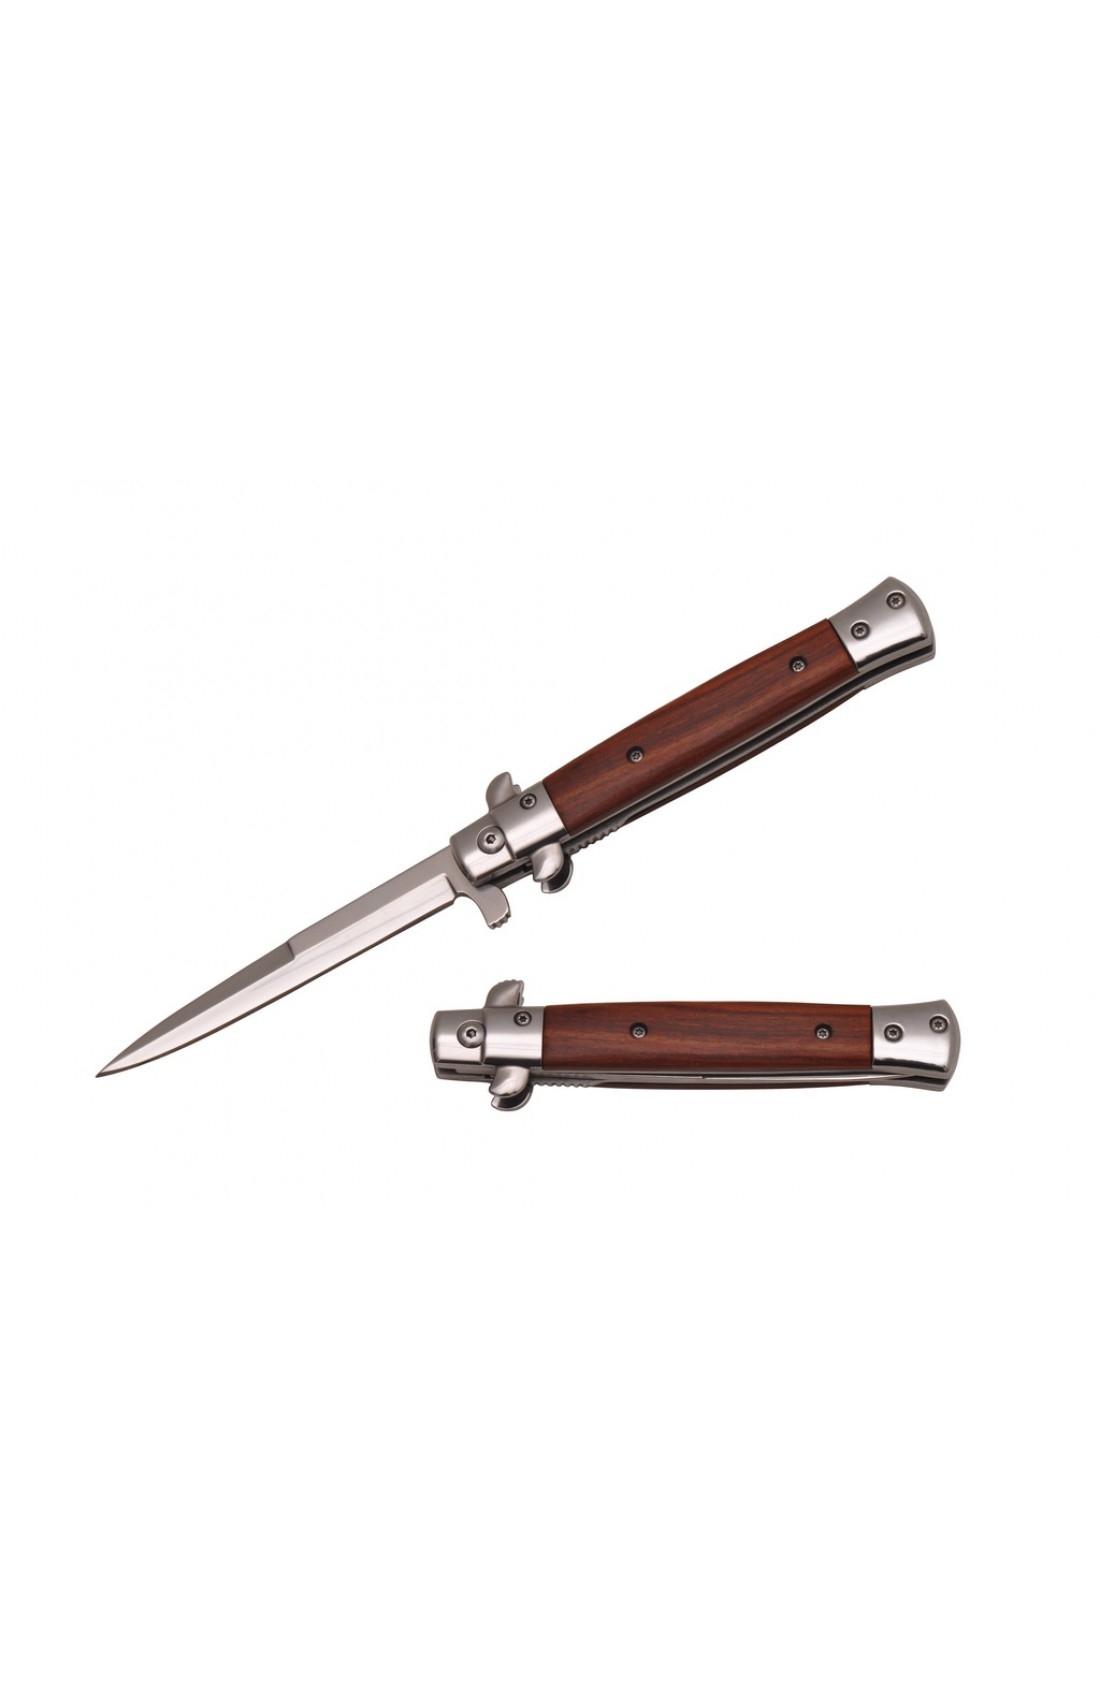 ''KNIFE T273337-1 9'''' Stiletto - Wood''